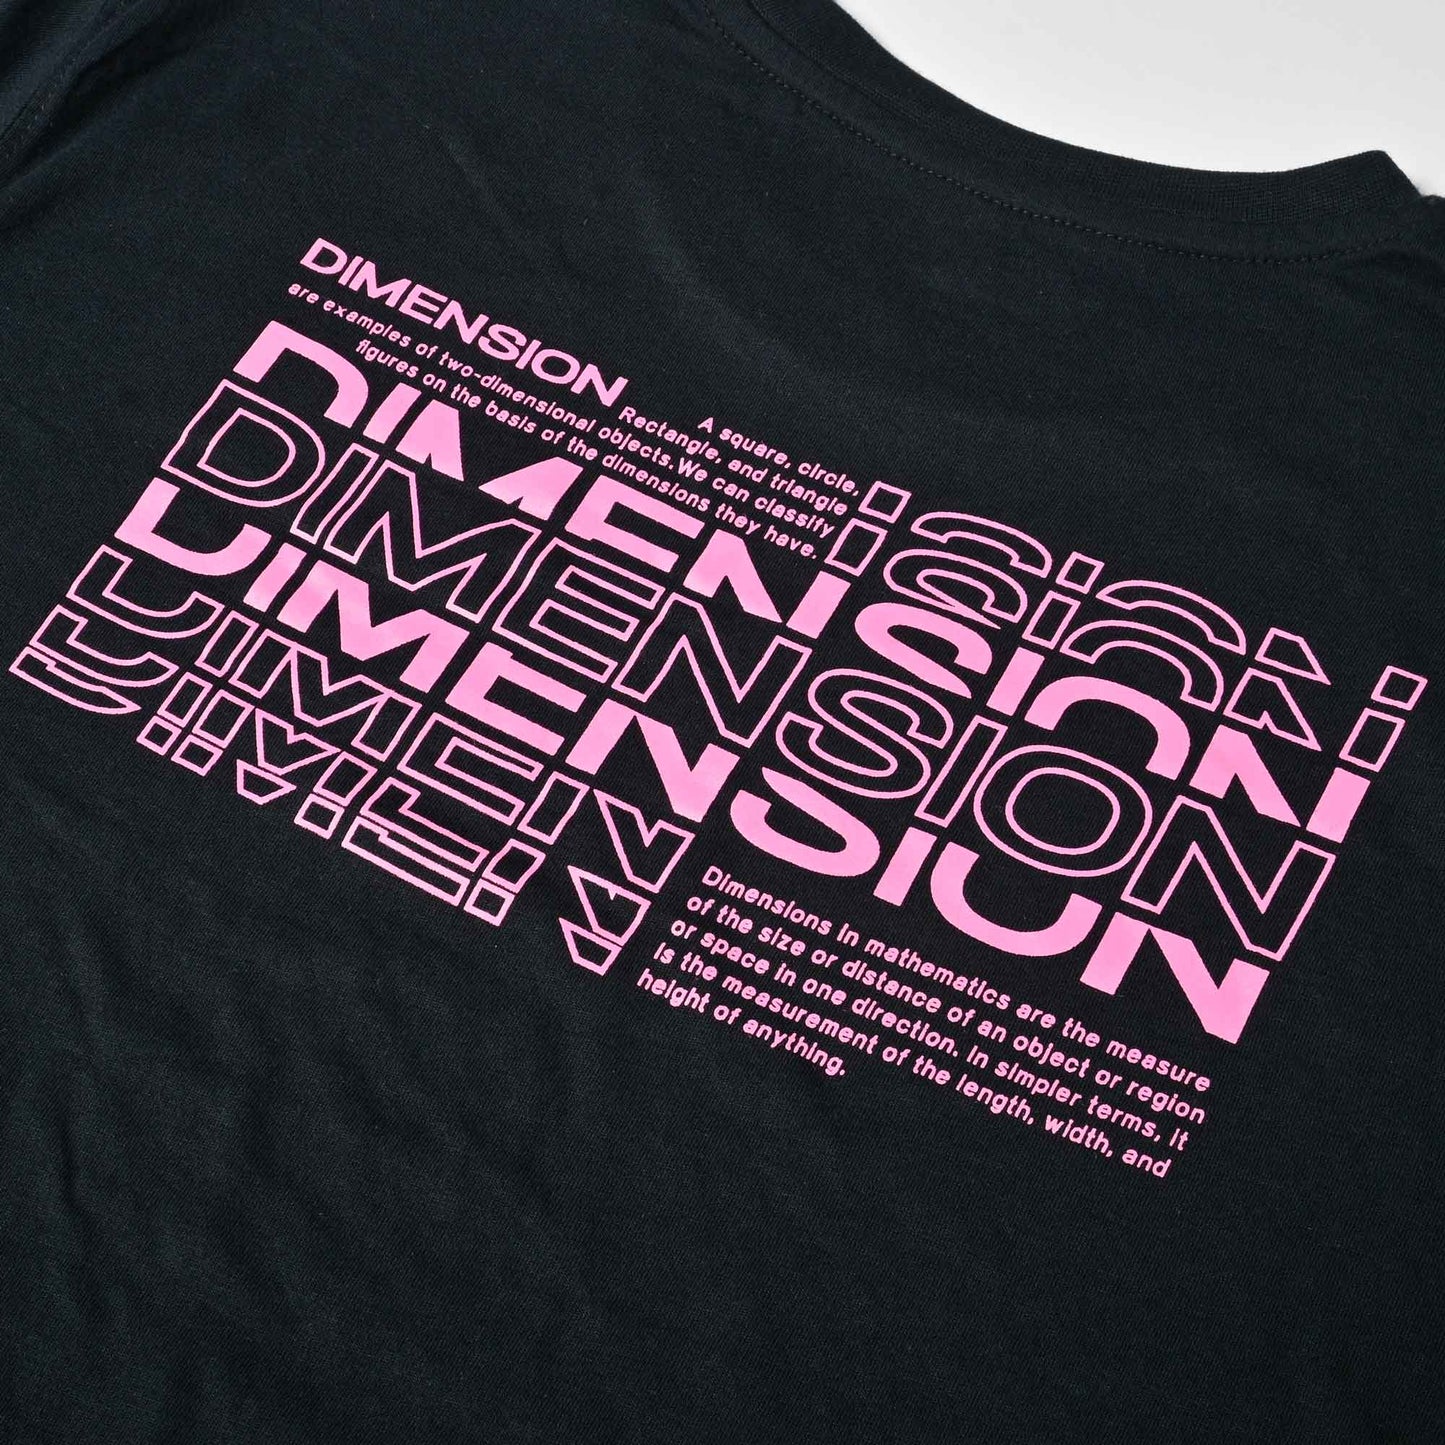 Polo Republica Men's Fedup Dimension Printed Crew Neck Tee Shirt